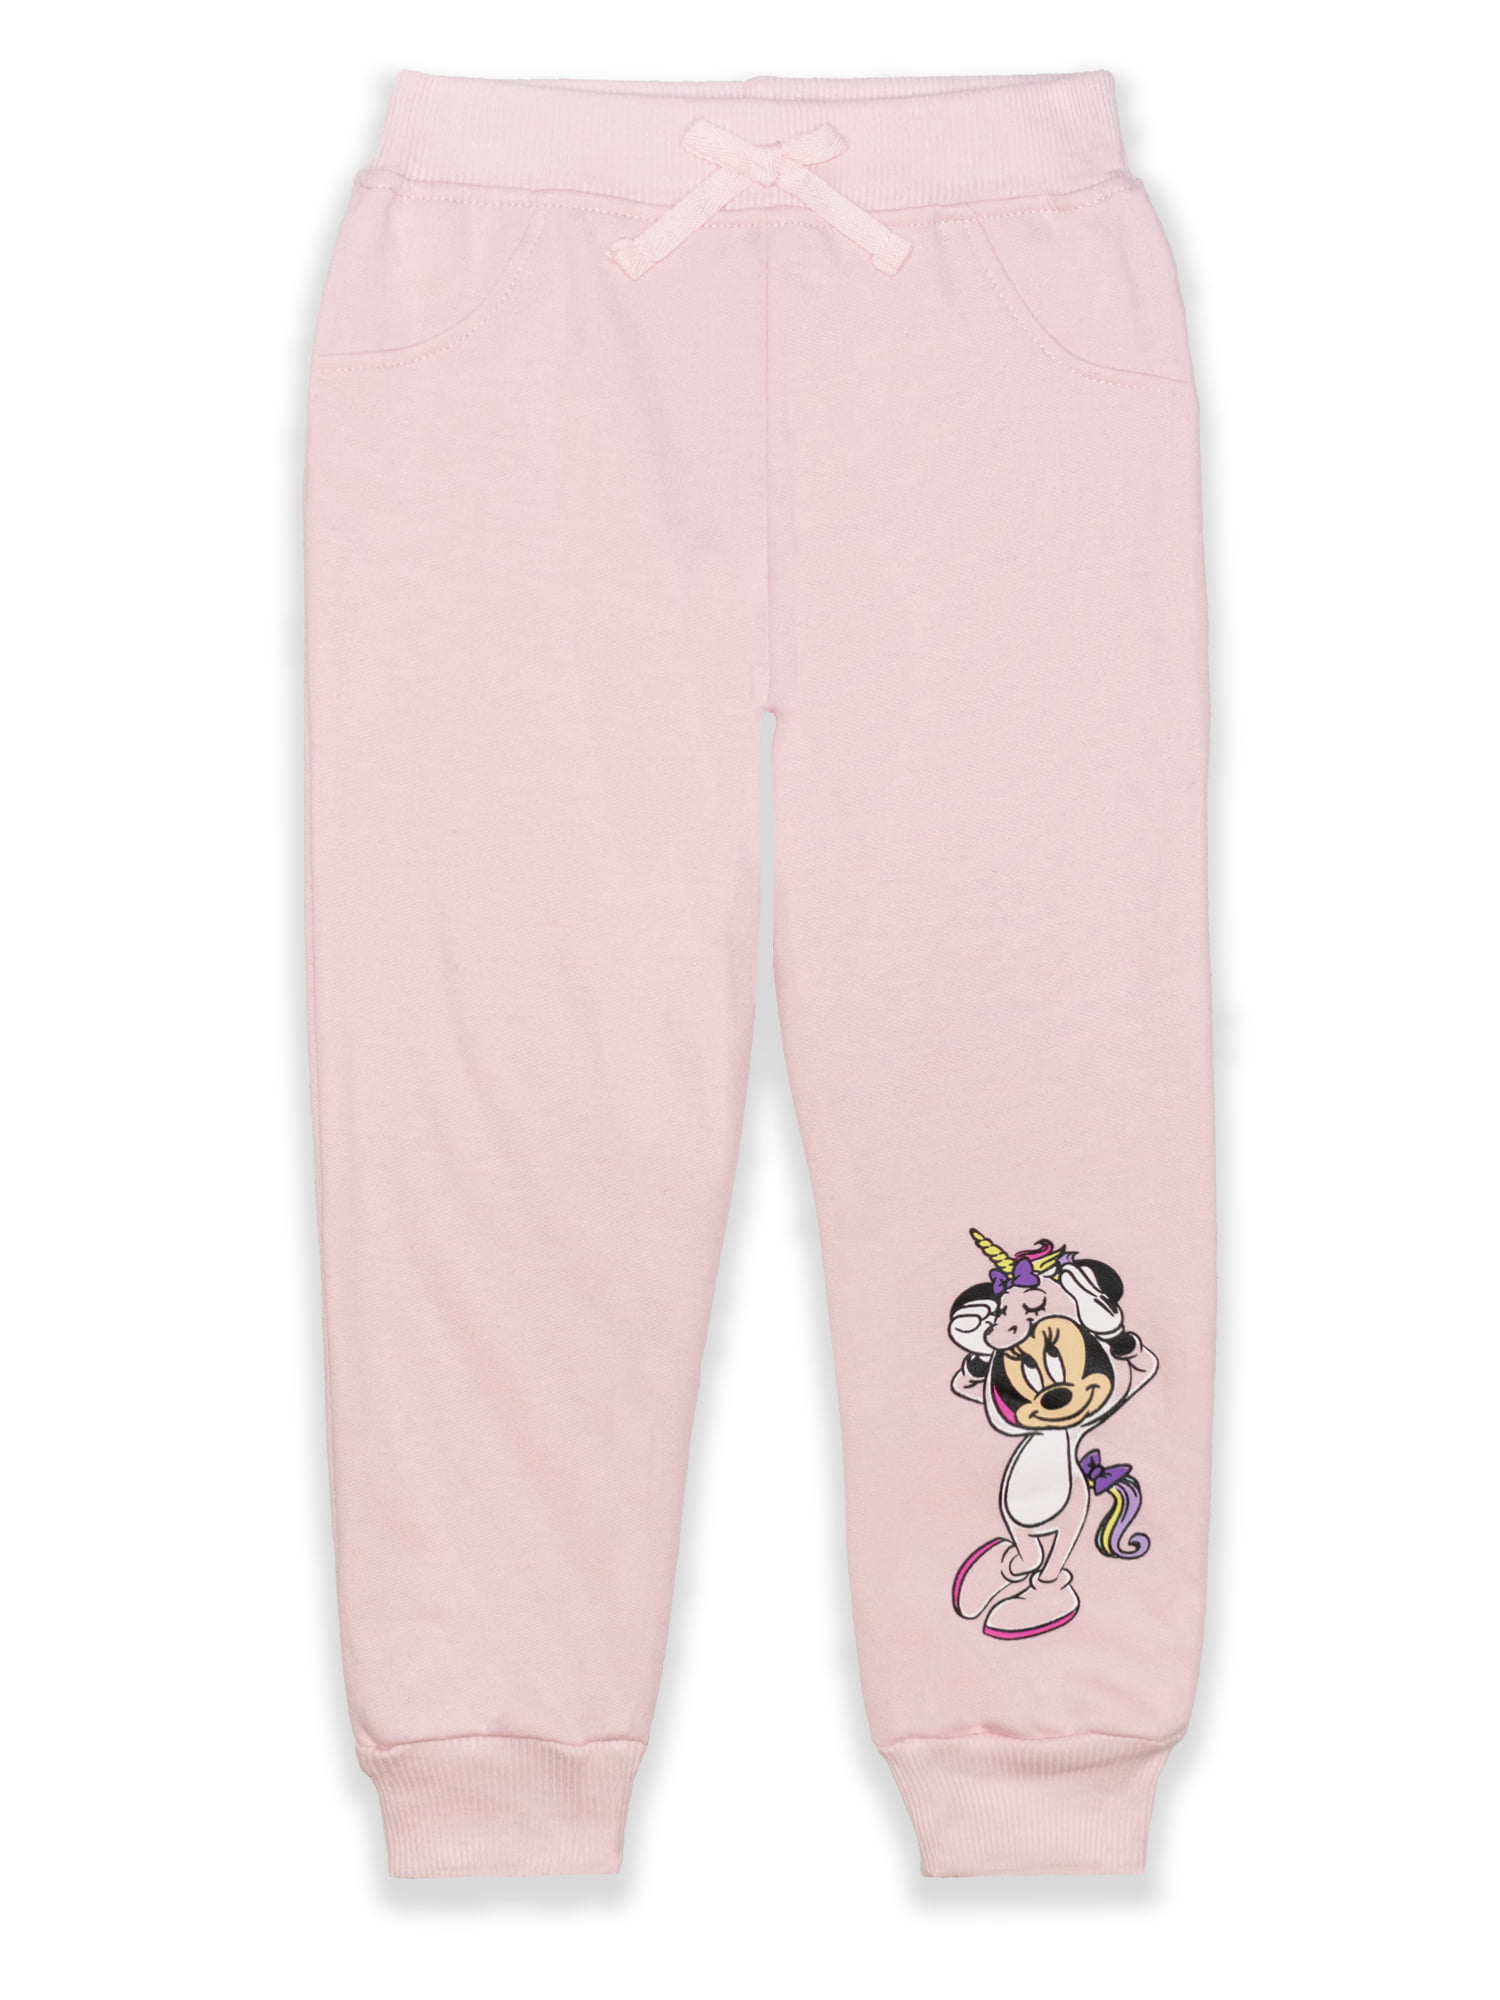 Disney Minnie Mouse Girls Jogger Sweatpants, 2-pack, Sizes 4-6X